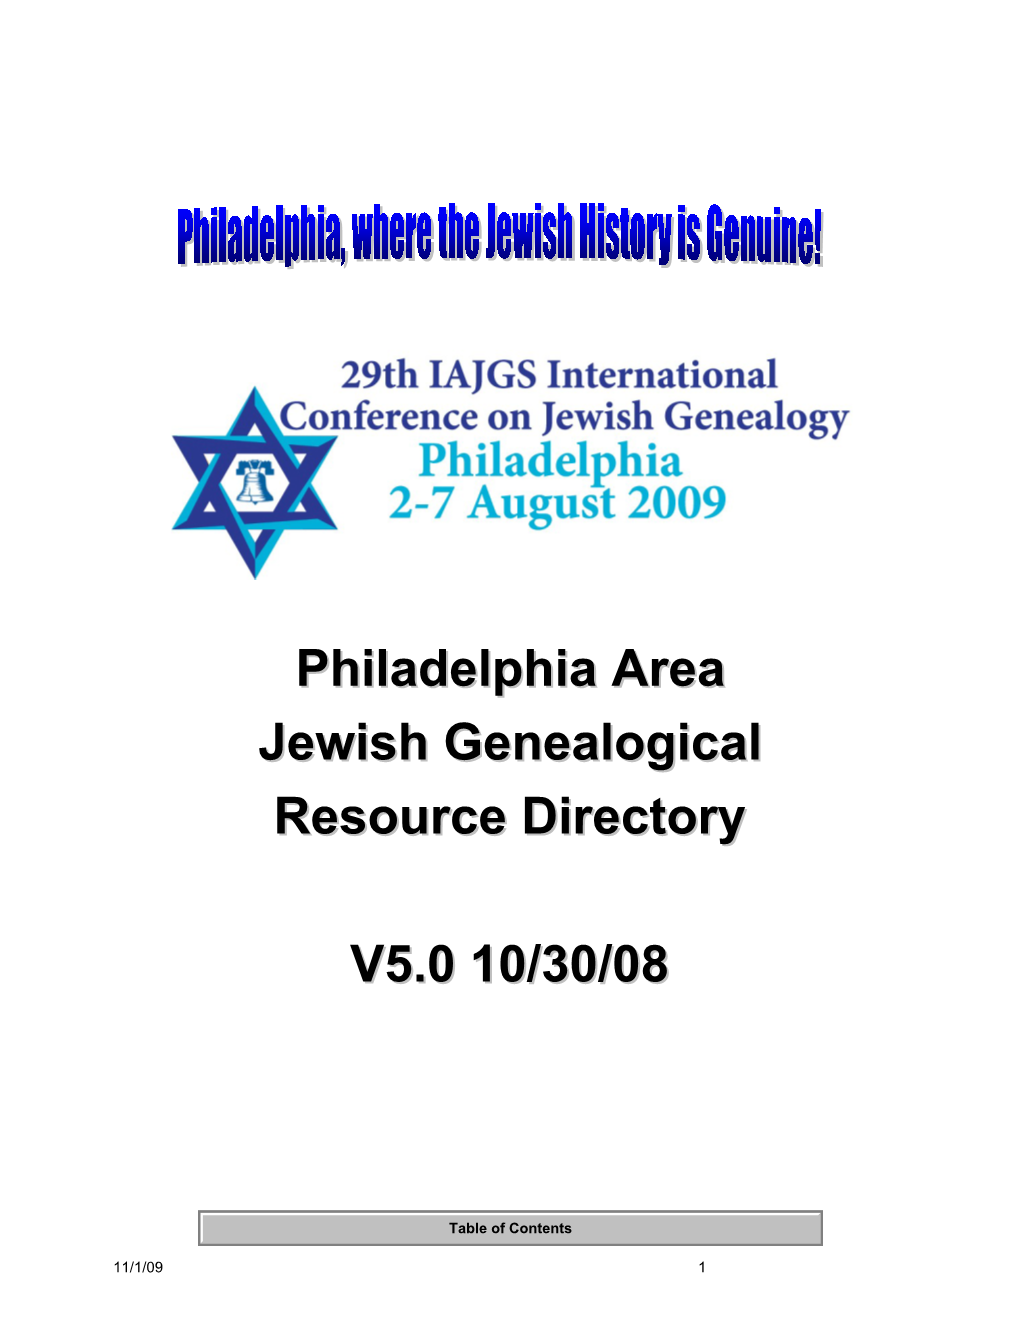 Philadelphia Area Jewish Genealogical Resource Directory